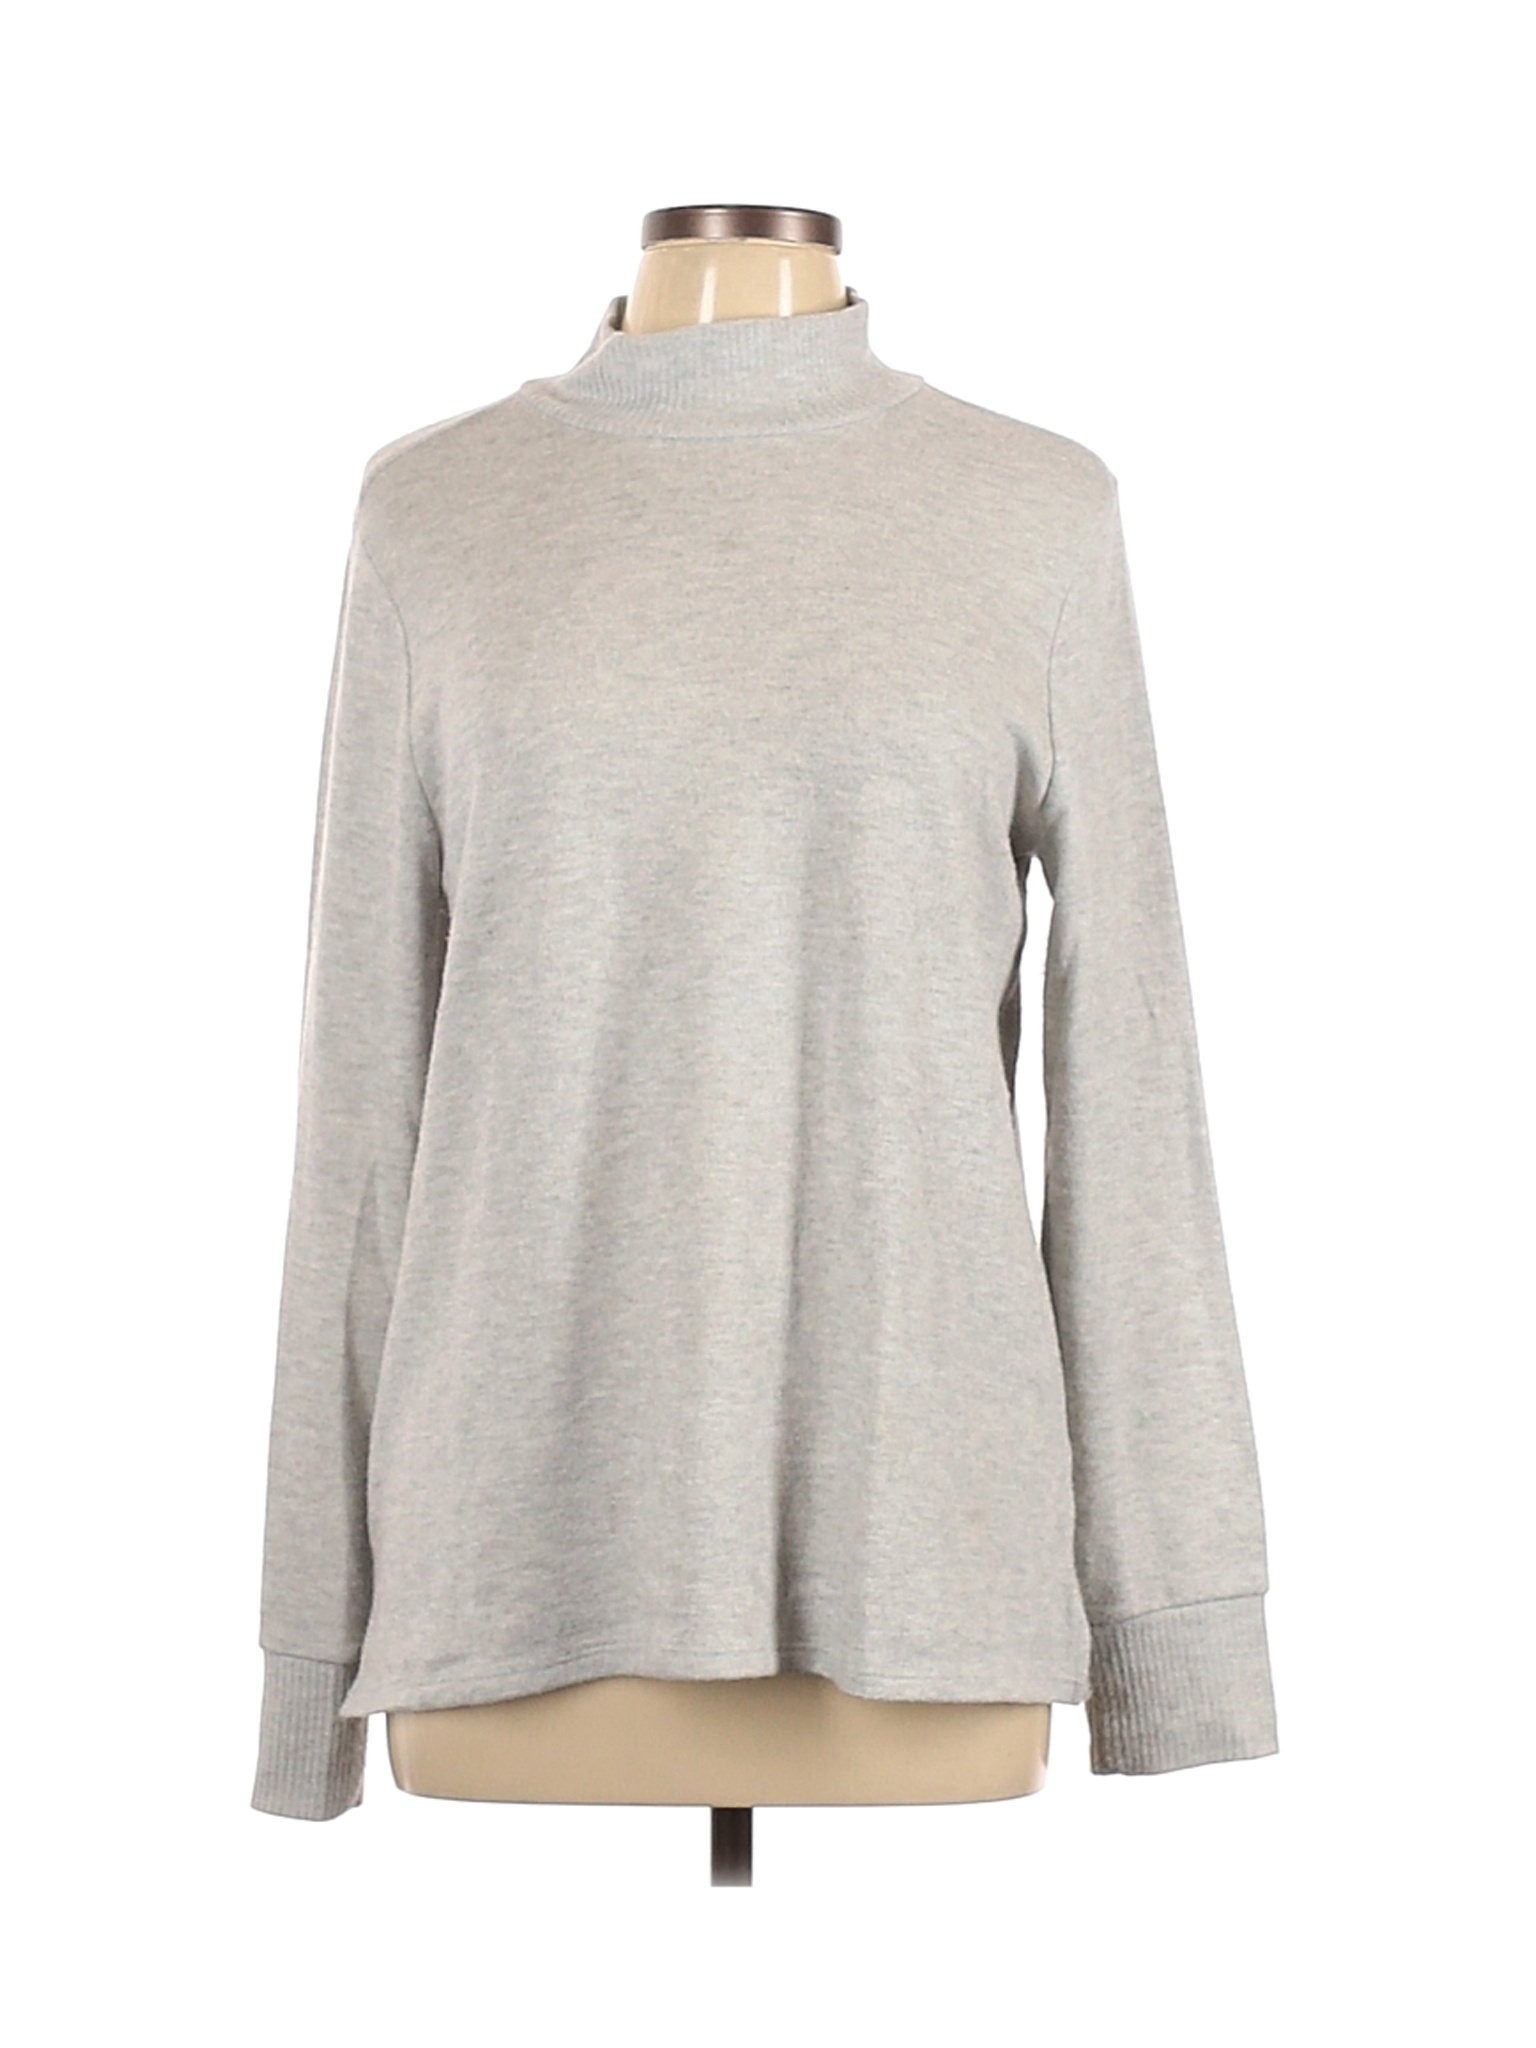 Lucky Brand Women Gray Pullover Sweater L | eBay